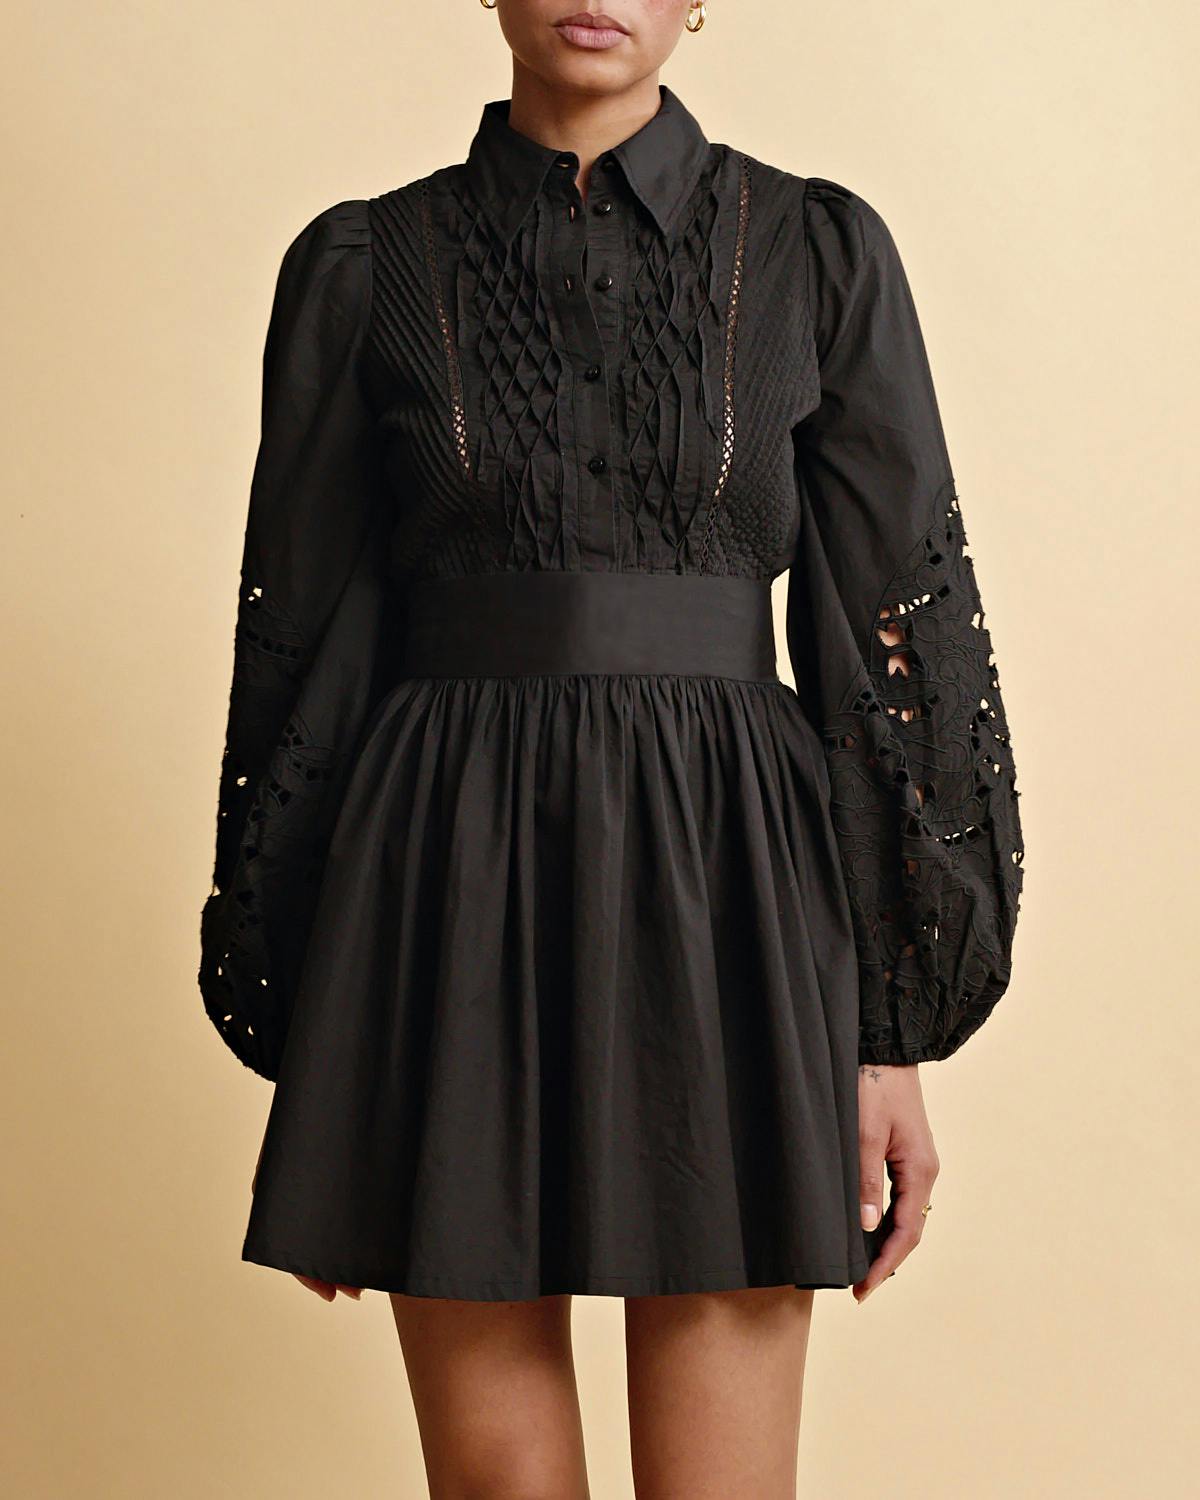 Poplin Smocking dress, Black. Image #1